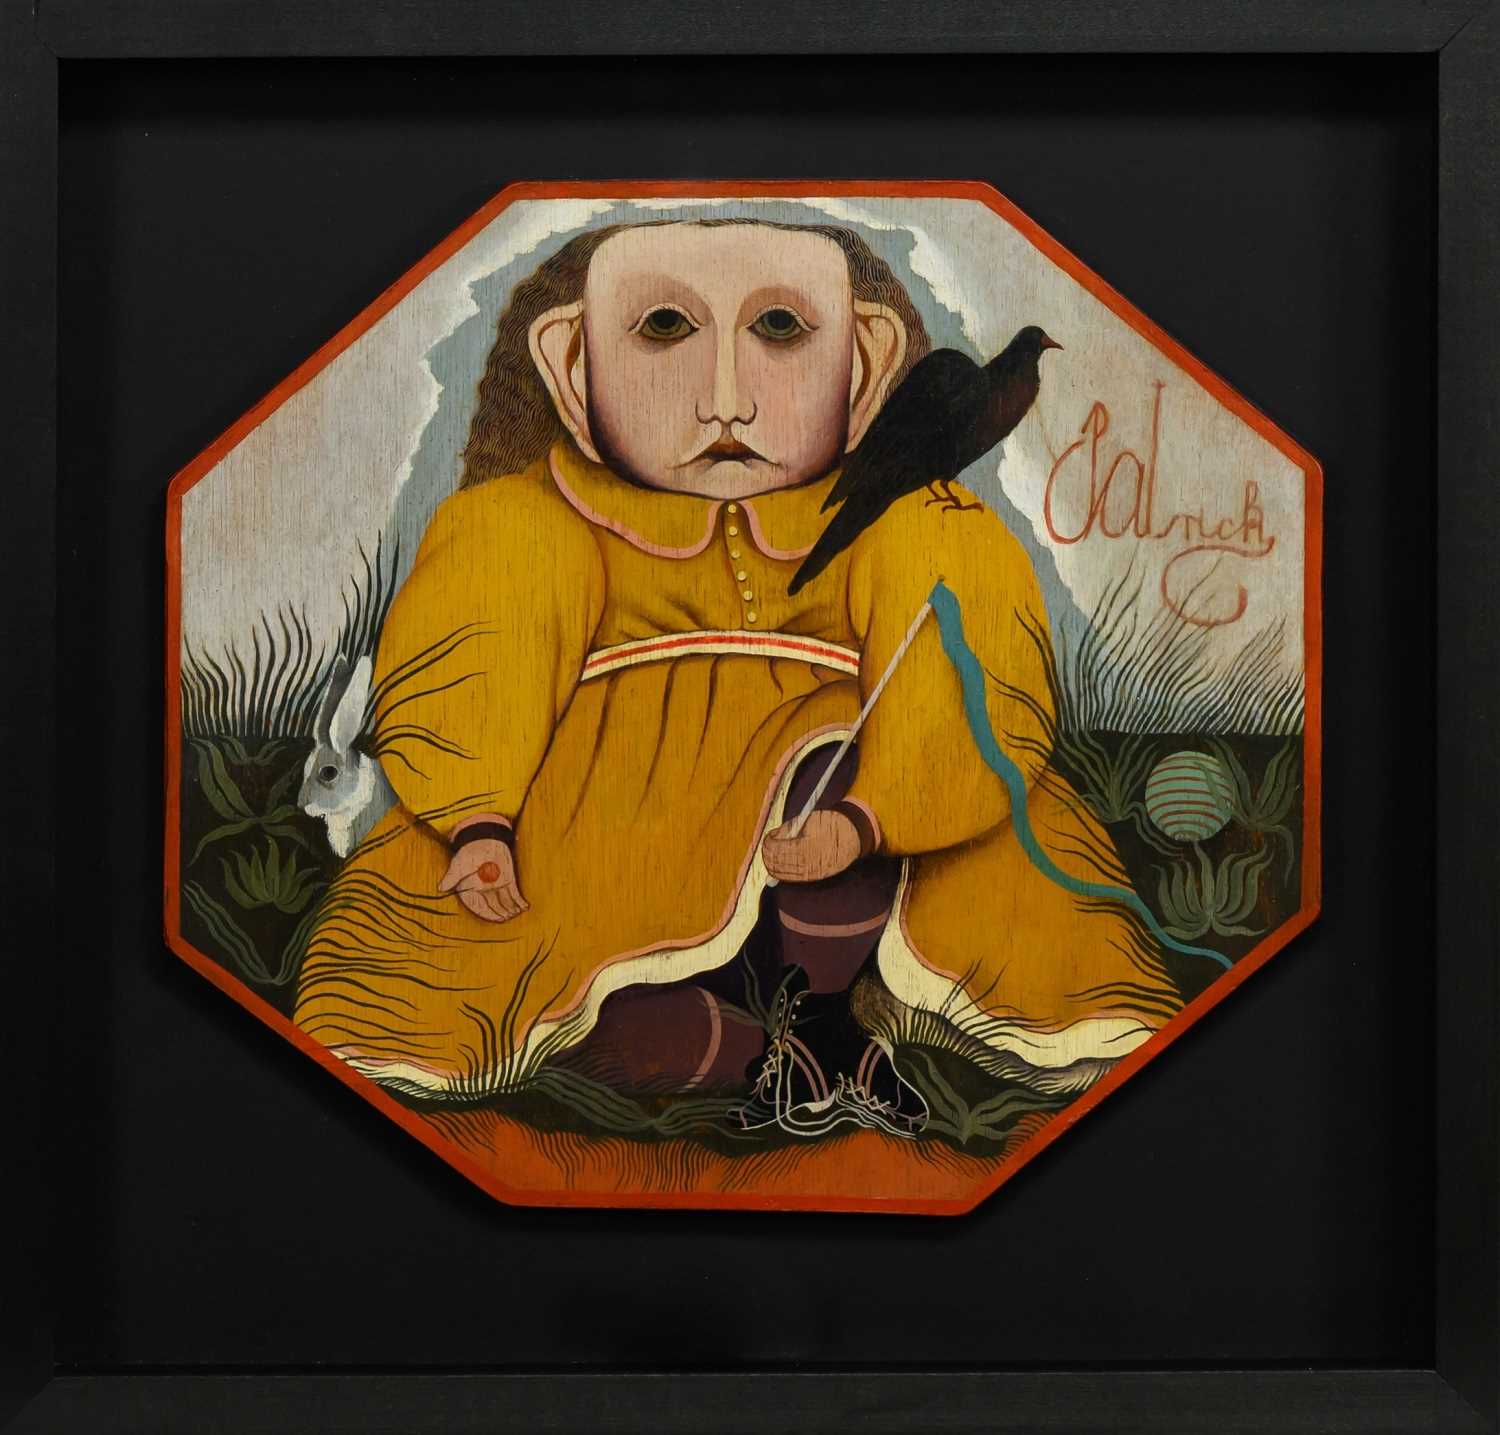 The Scottish Contemporary Art Auction